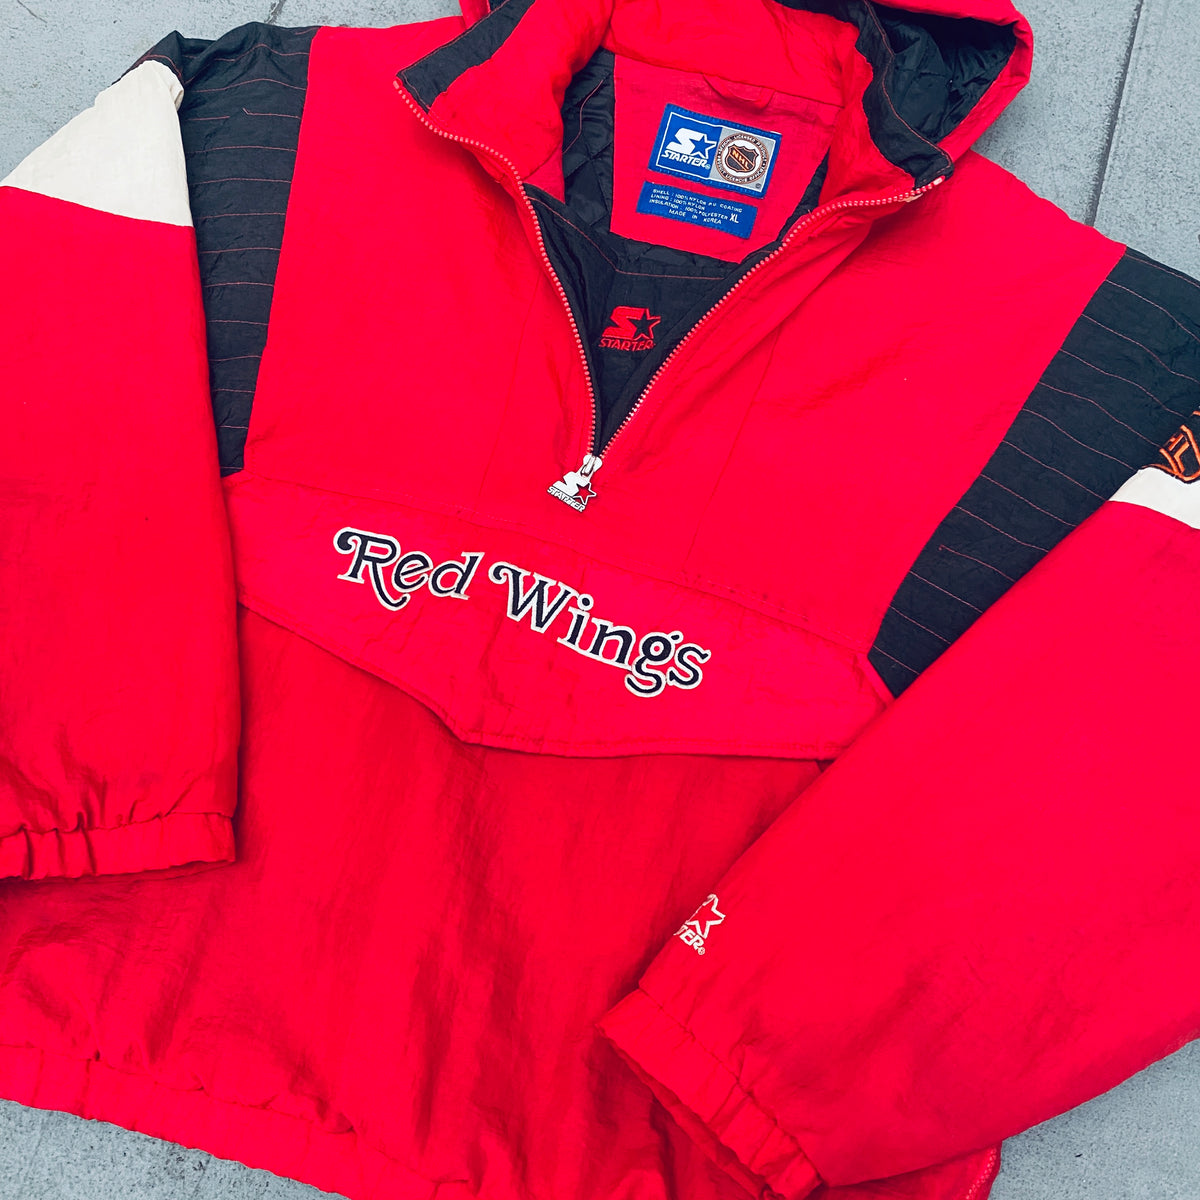 Vintage 90s Atlanta Braves Pullover Parka Jacket by Starter Size M